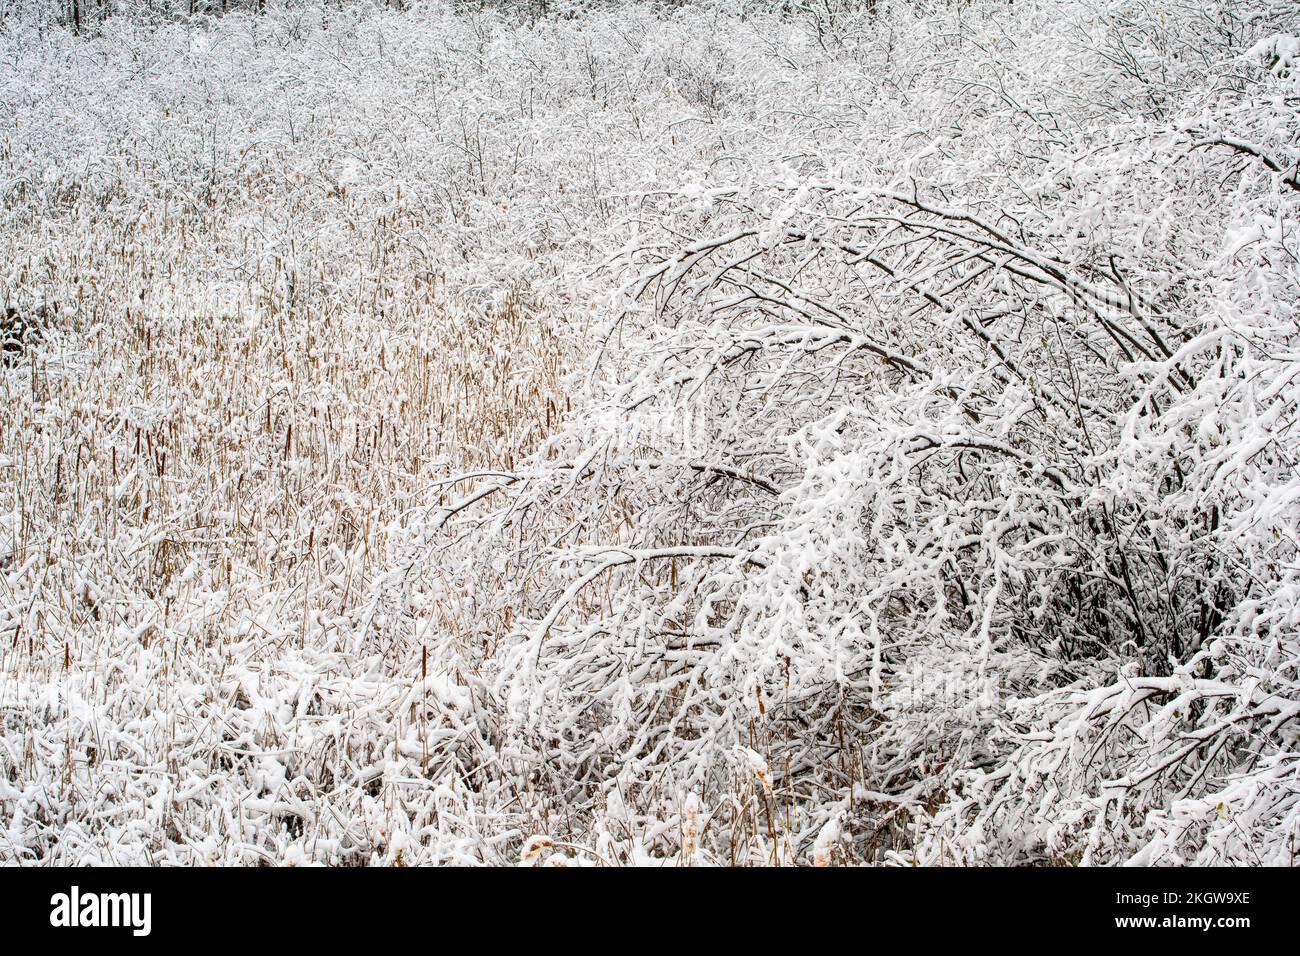 Marsh vegetation in early snow, Greater Sudbury, Ontario, Canada Stock Photo